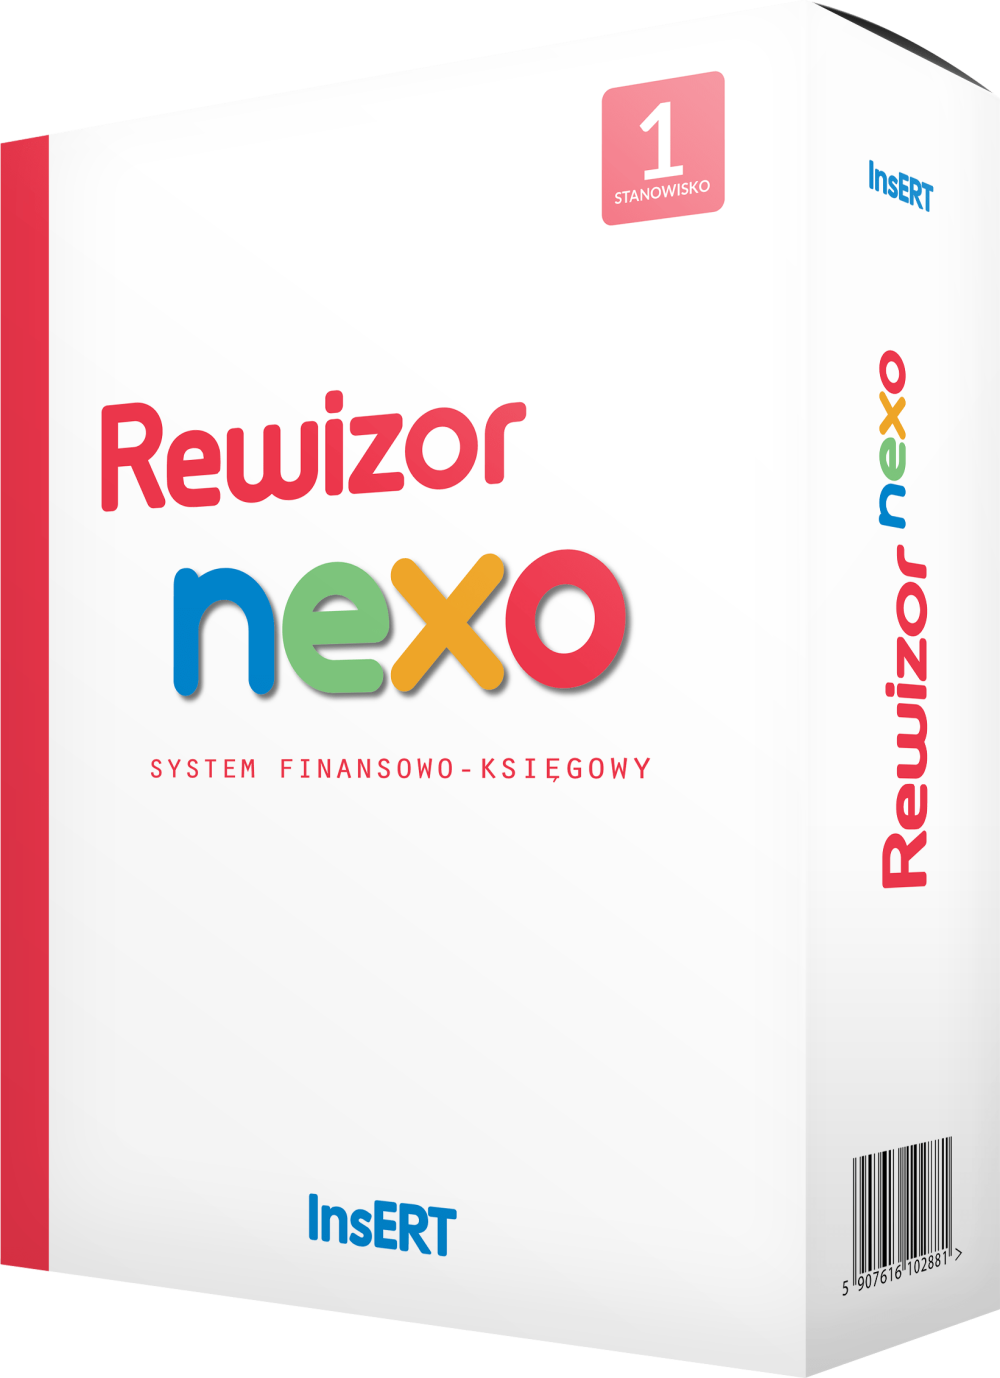 Rewizor_nexo_1_stanowisko_pudelko_dsgsoftware